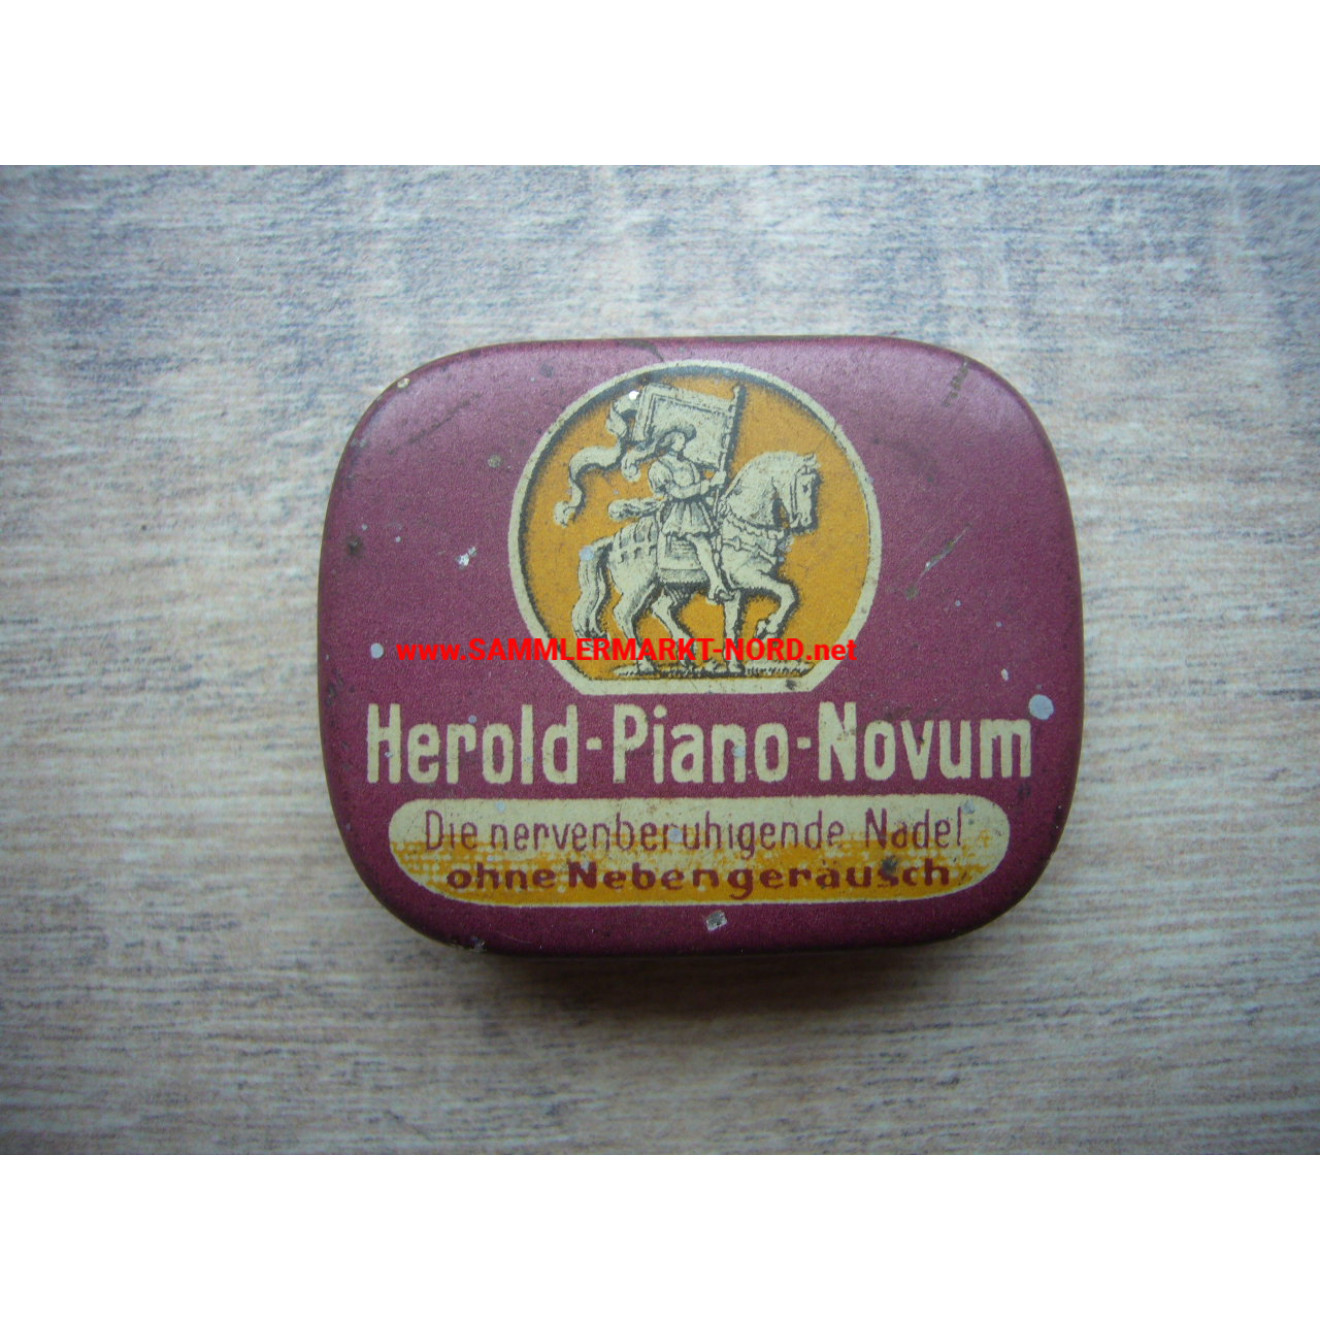 Wehrmacht - sutlers - Herold Piano Novum pins - tin can